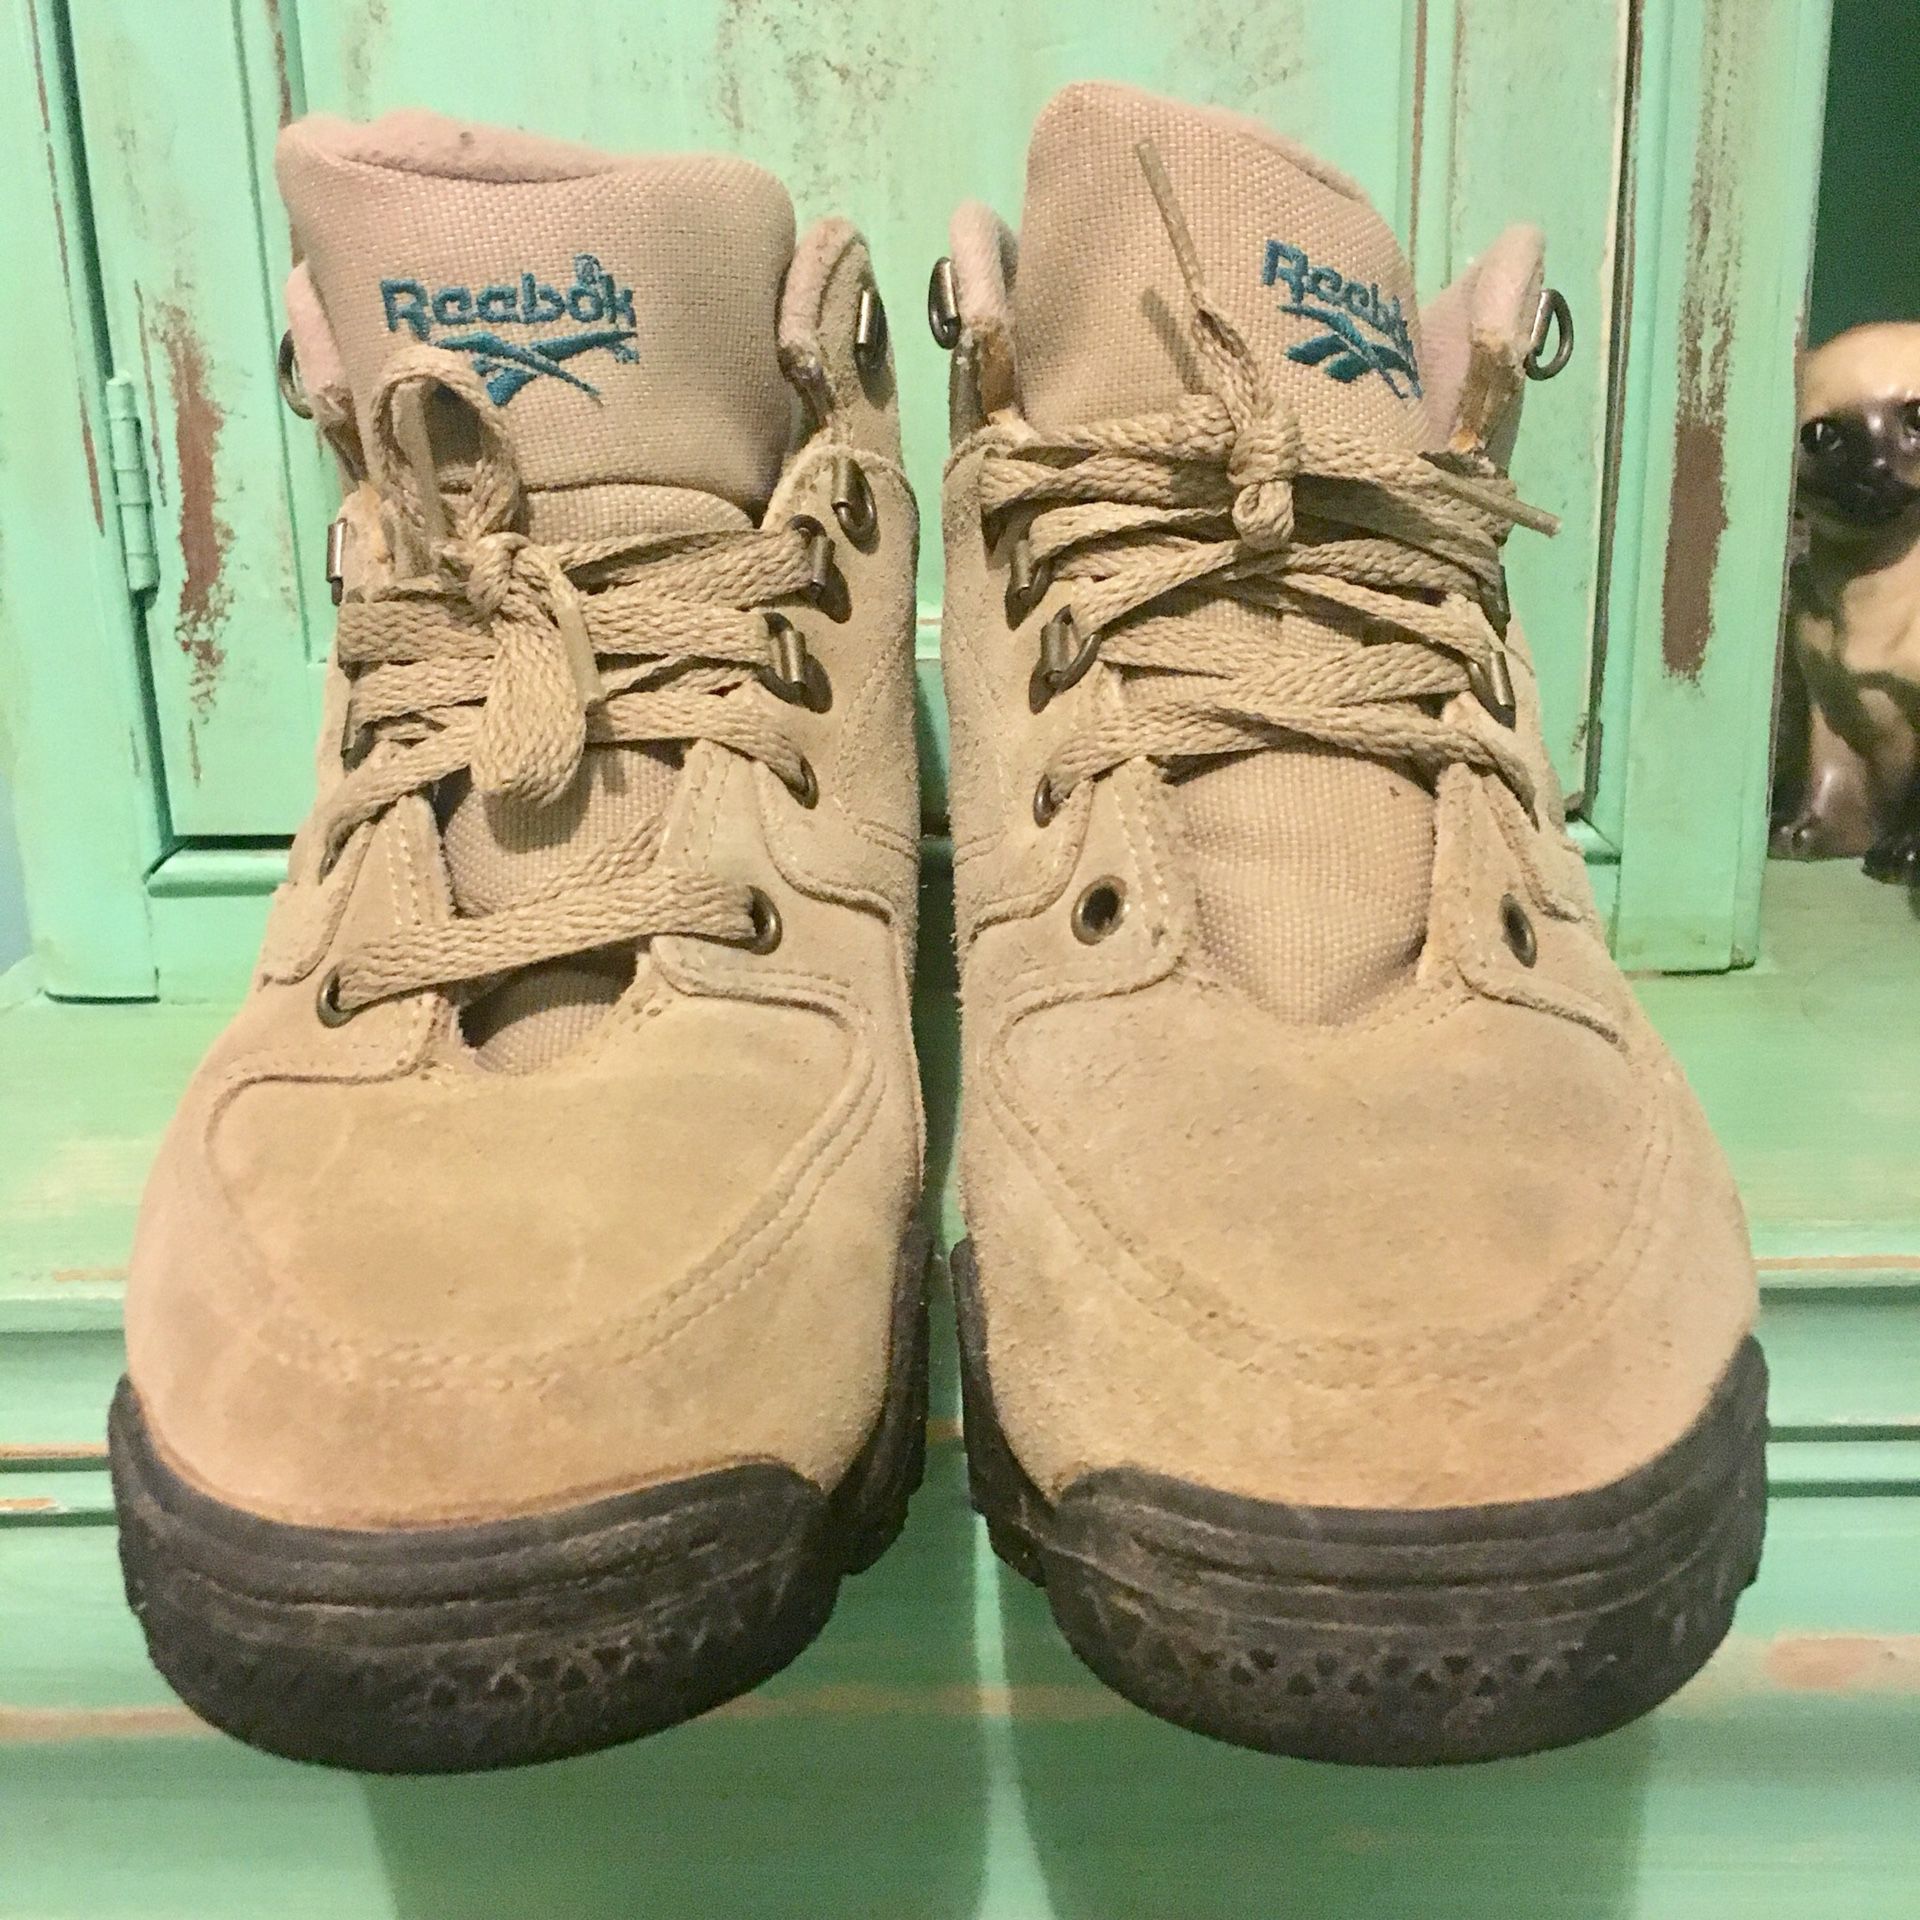 Vintage Reebok Women’s Hiking Boots Tan Suede 7.5